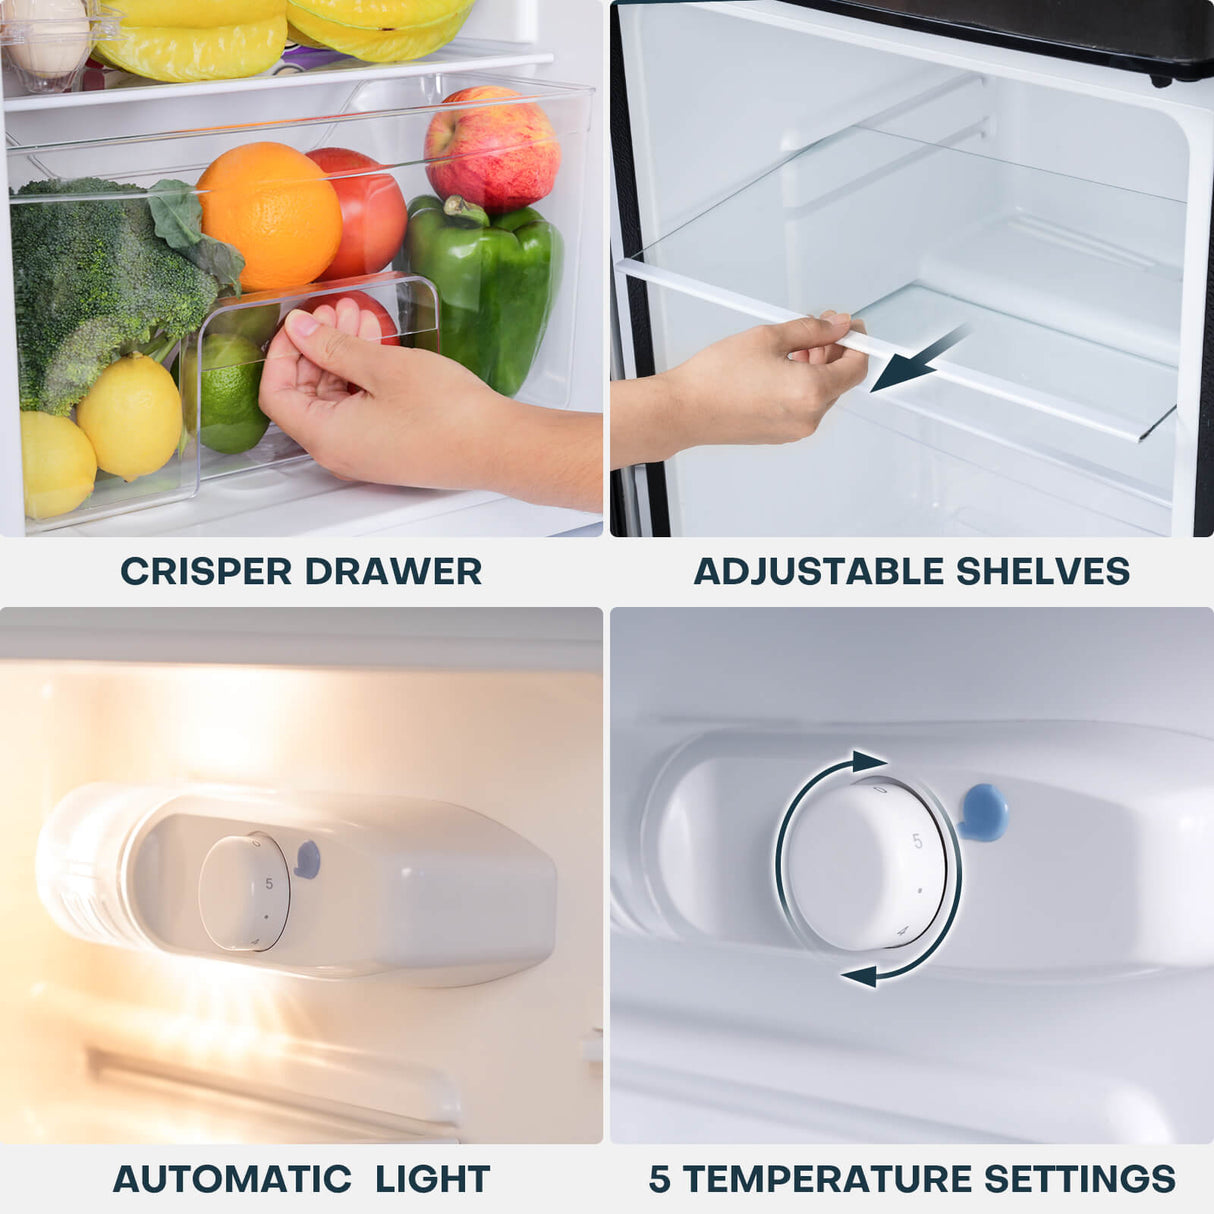 Upstreman 4.5 Cu.Ft Mini Fridge with Freezer, Single Door Small Refrigerator, Adjustable Thermostat, Low Noise, Energy-Efficient, Compact